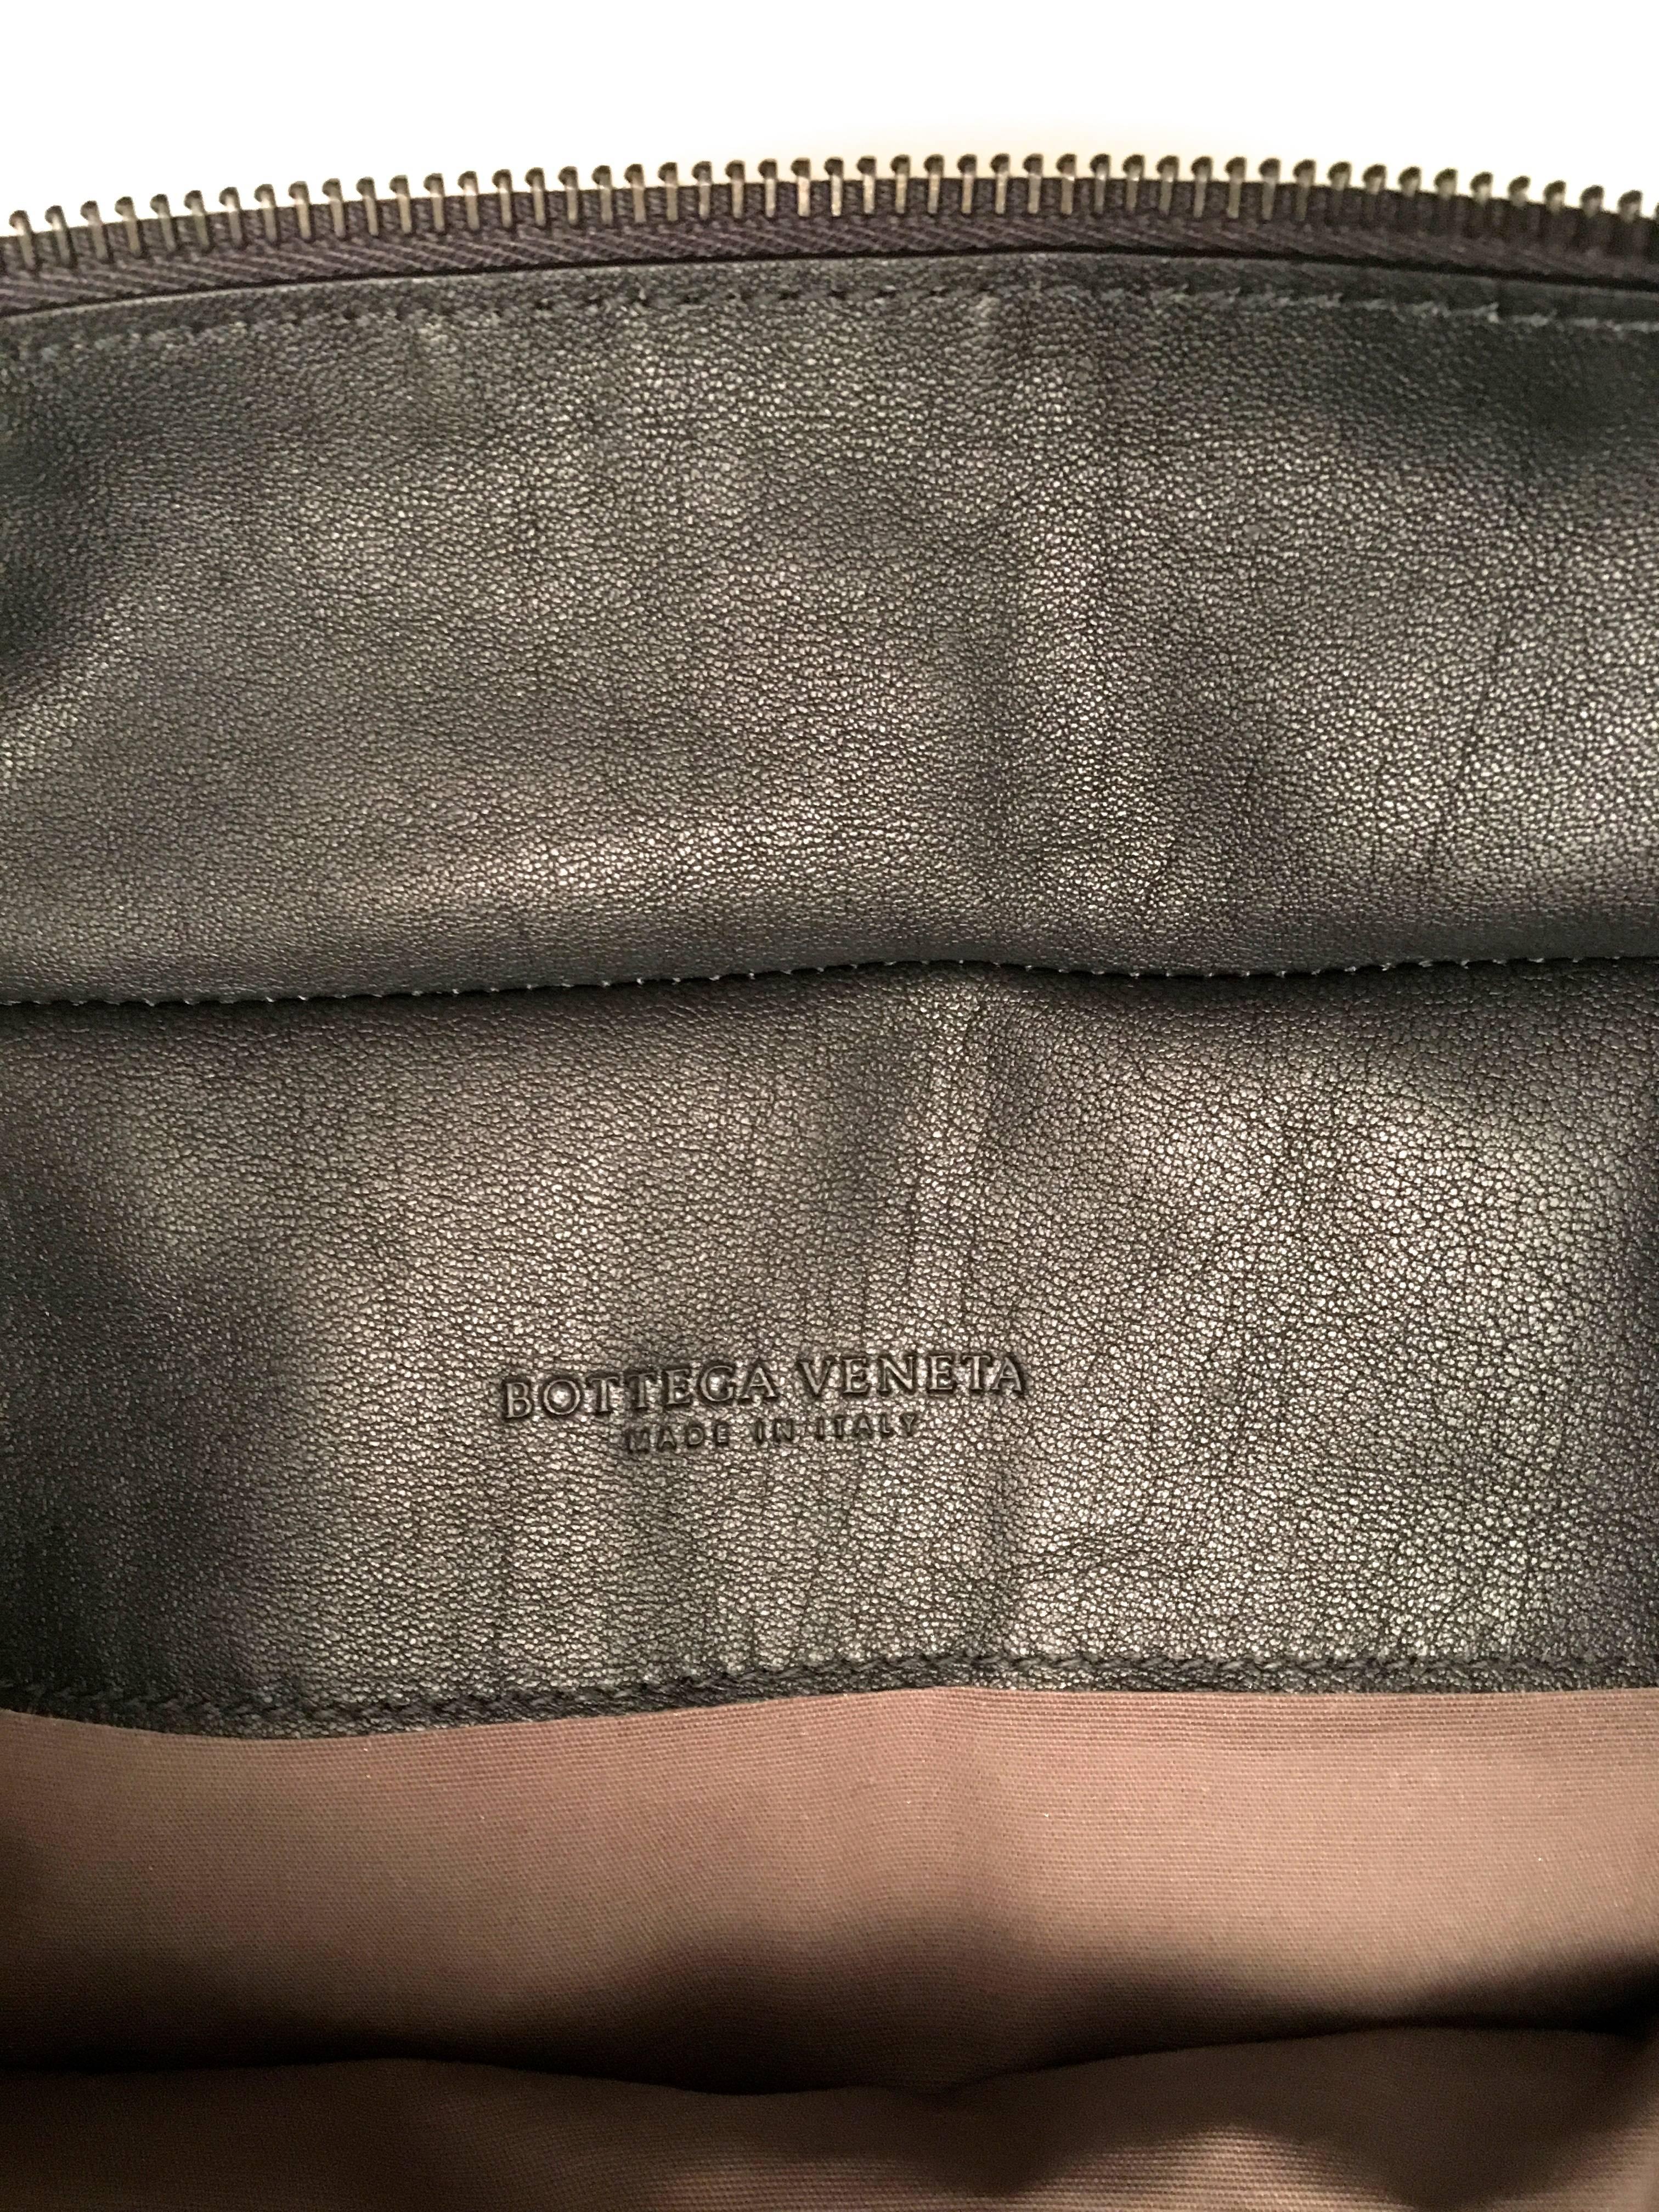 Bottega Veneta  Purse / Tote / Messenger Bag/Limited Edition For Sale 2